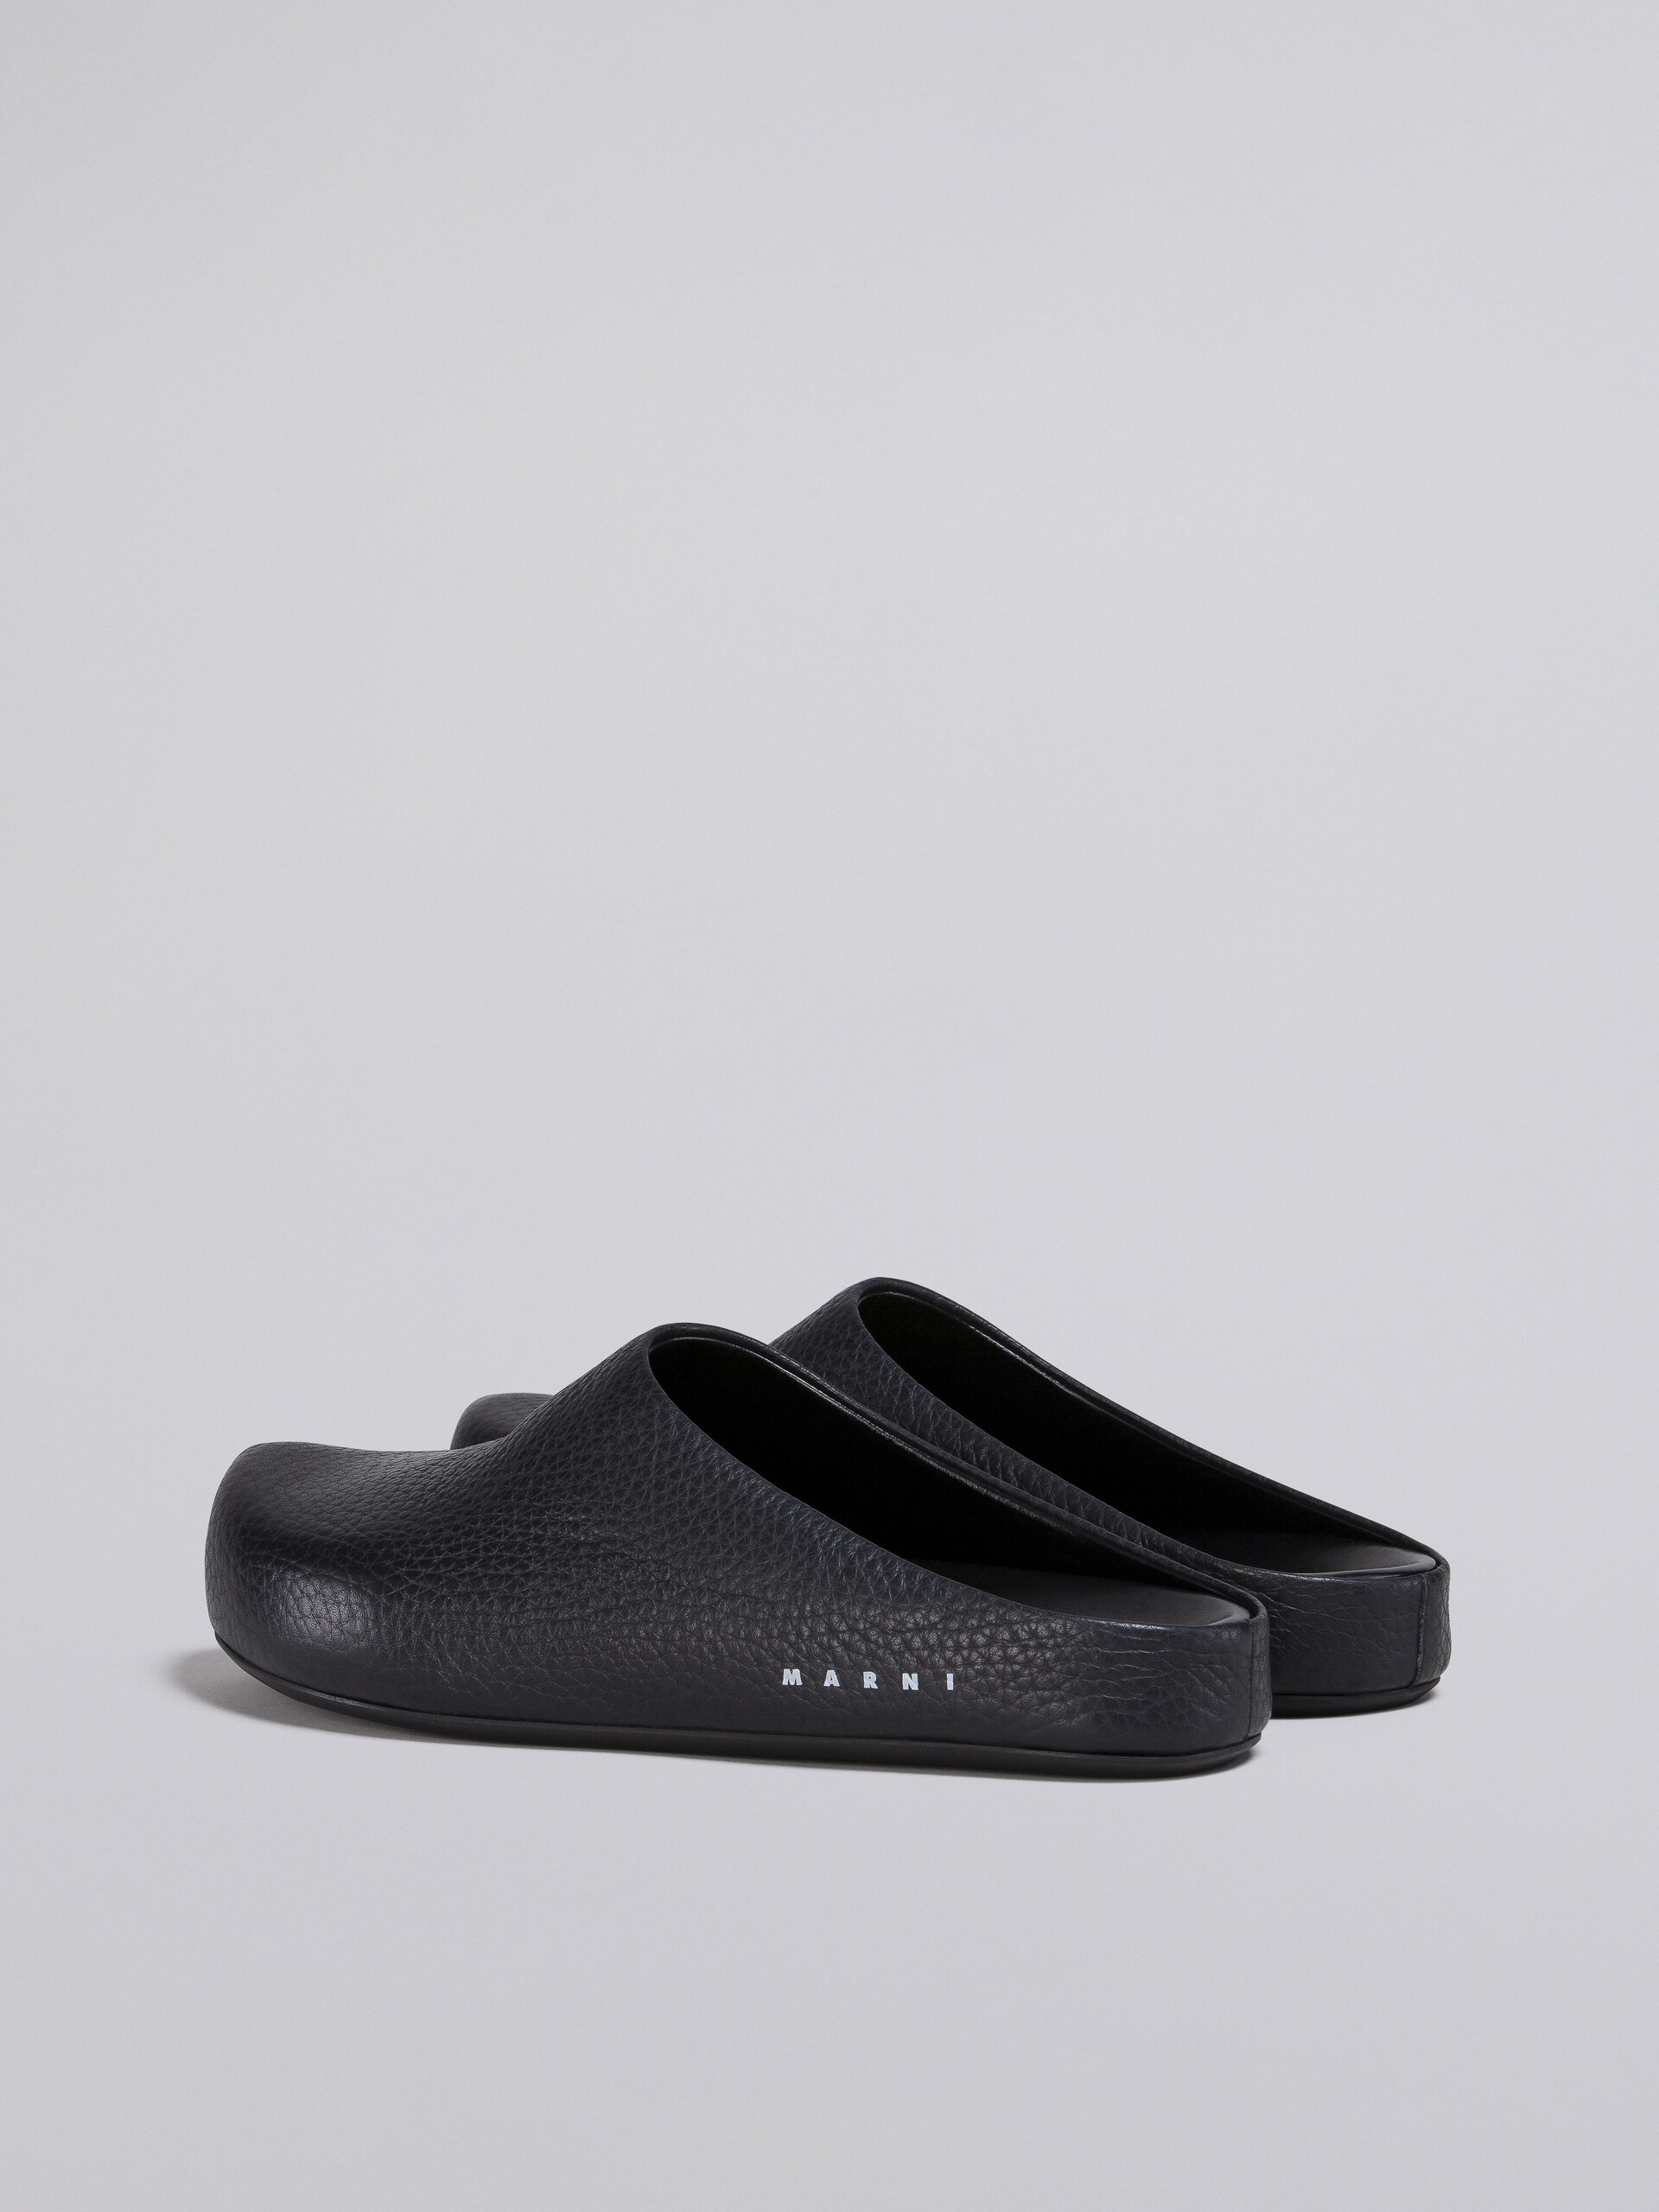 Unisex-Sandale aus schwarzem genarbtem Kalbsleder - Holzschuhe - Image 3